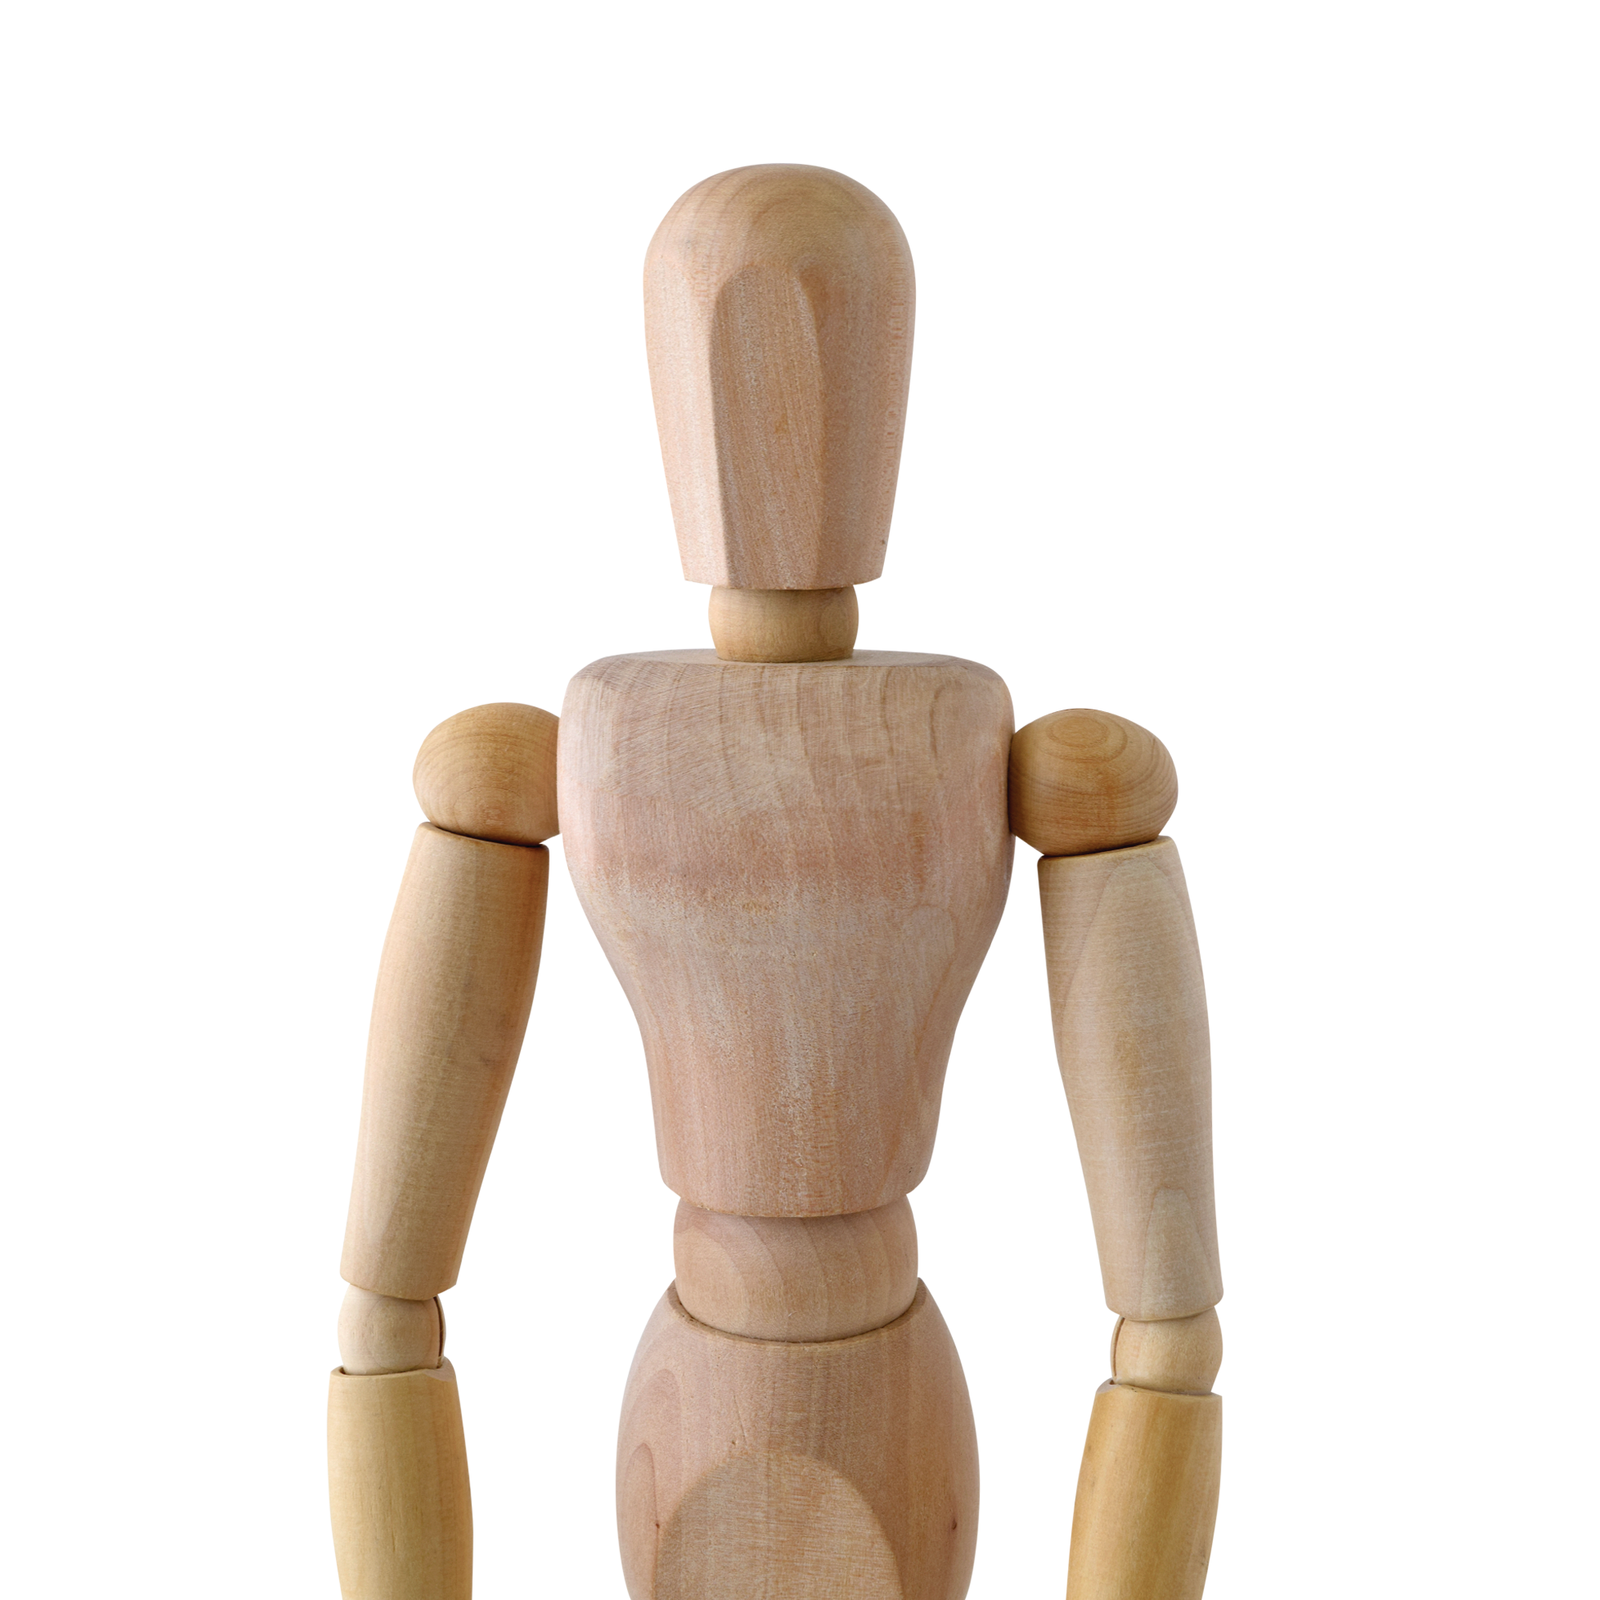 ATL - Maniquí de madera articulado femenino 40.5 cm